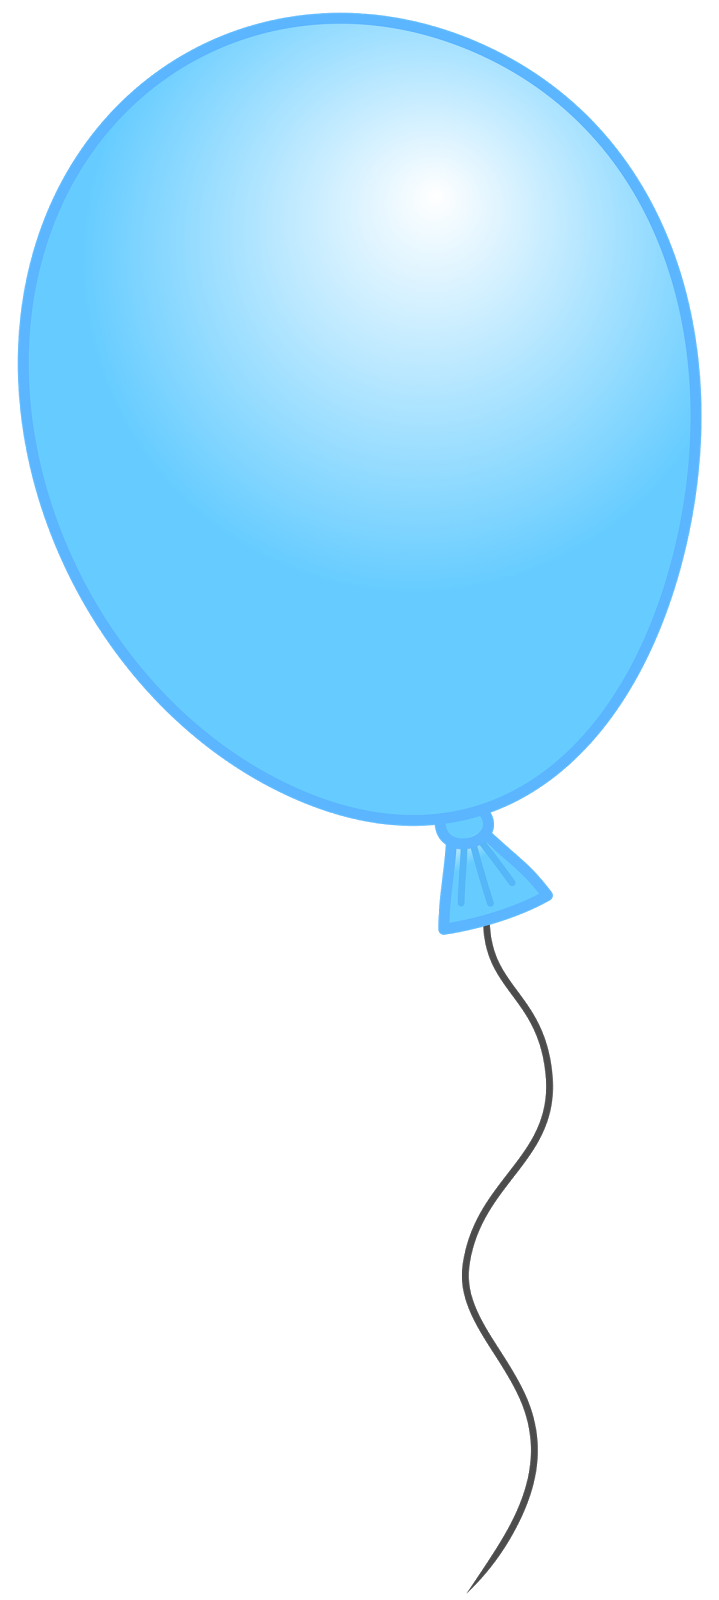 Blue Single Balloon Free Transparent Image HQ PNG Image